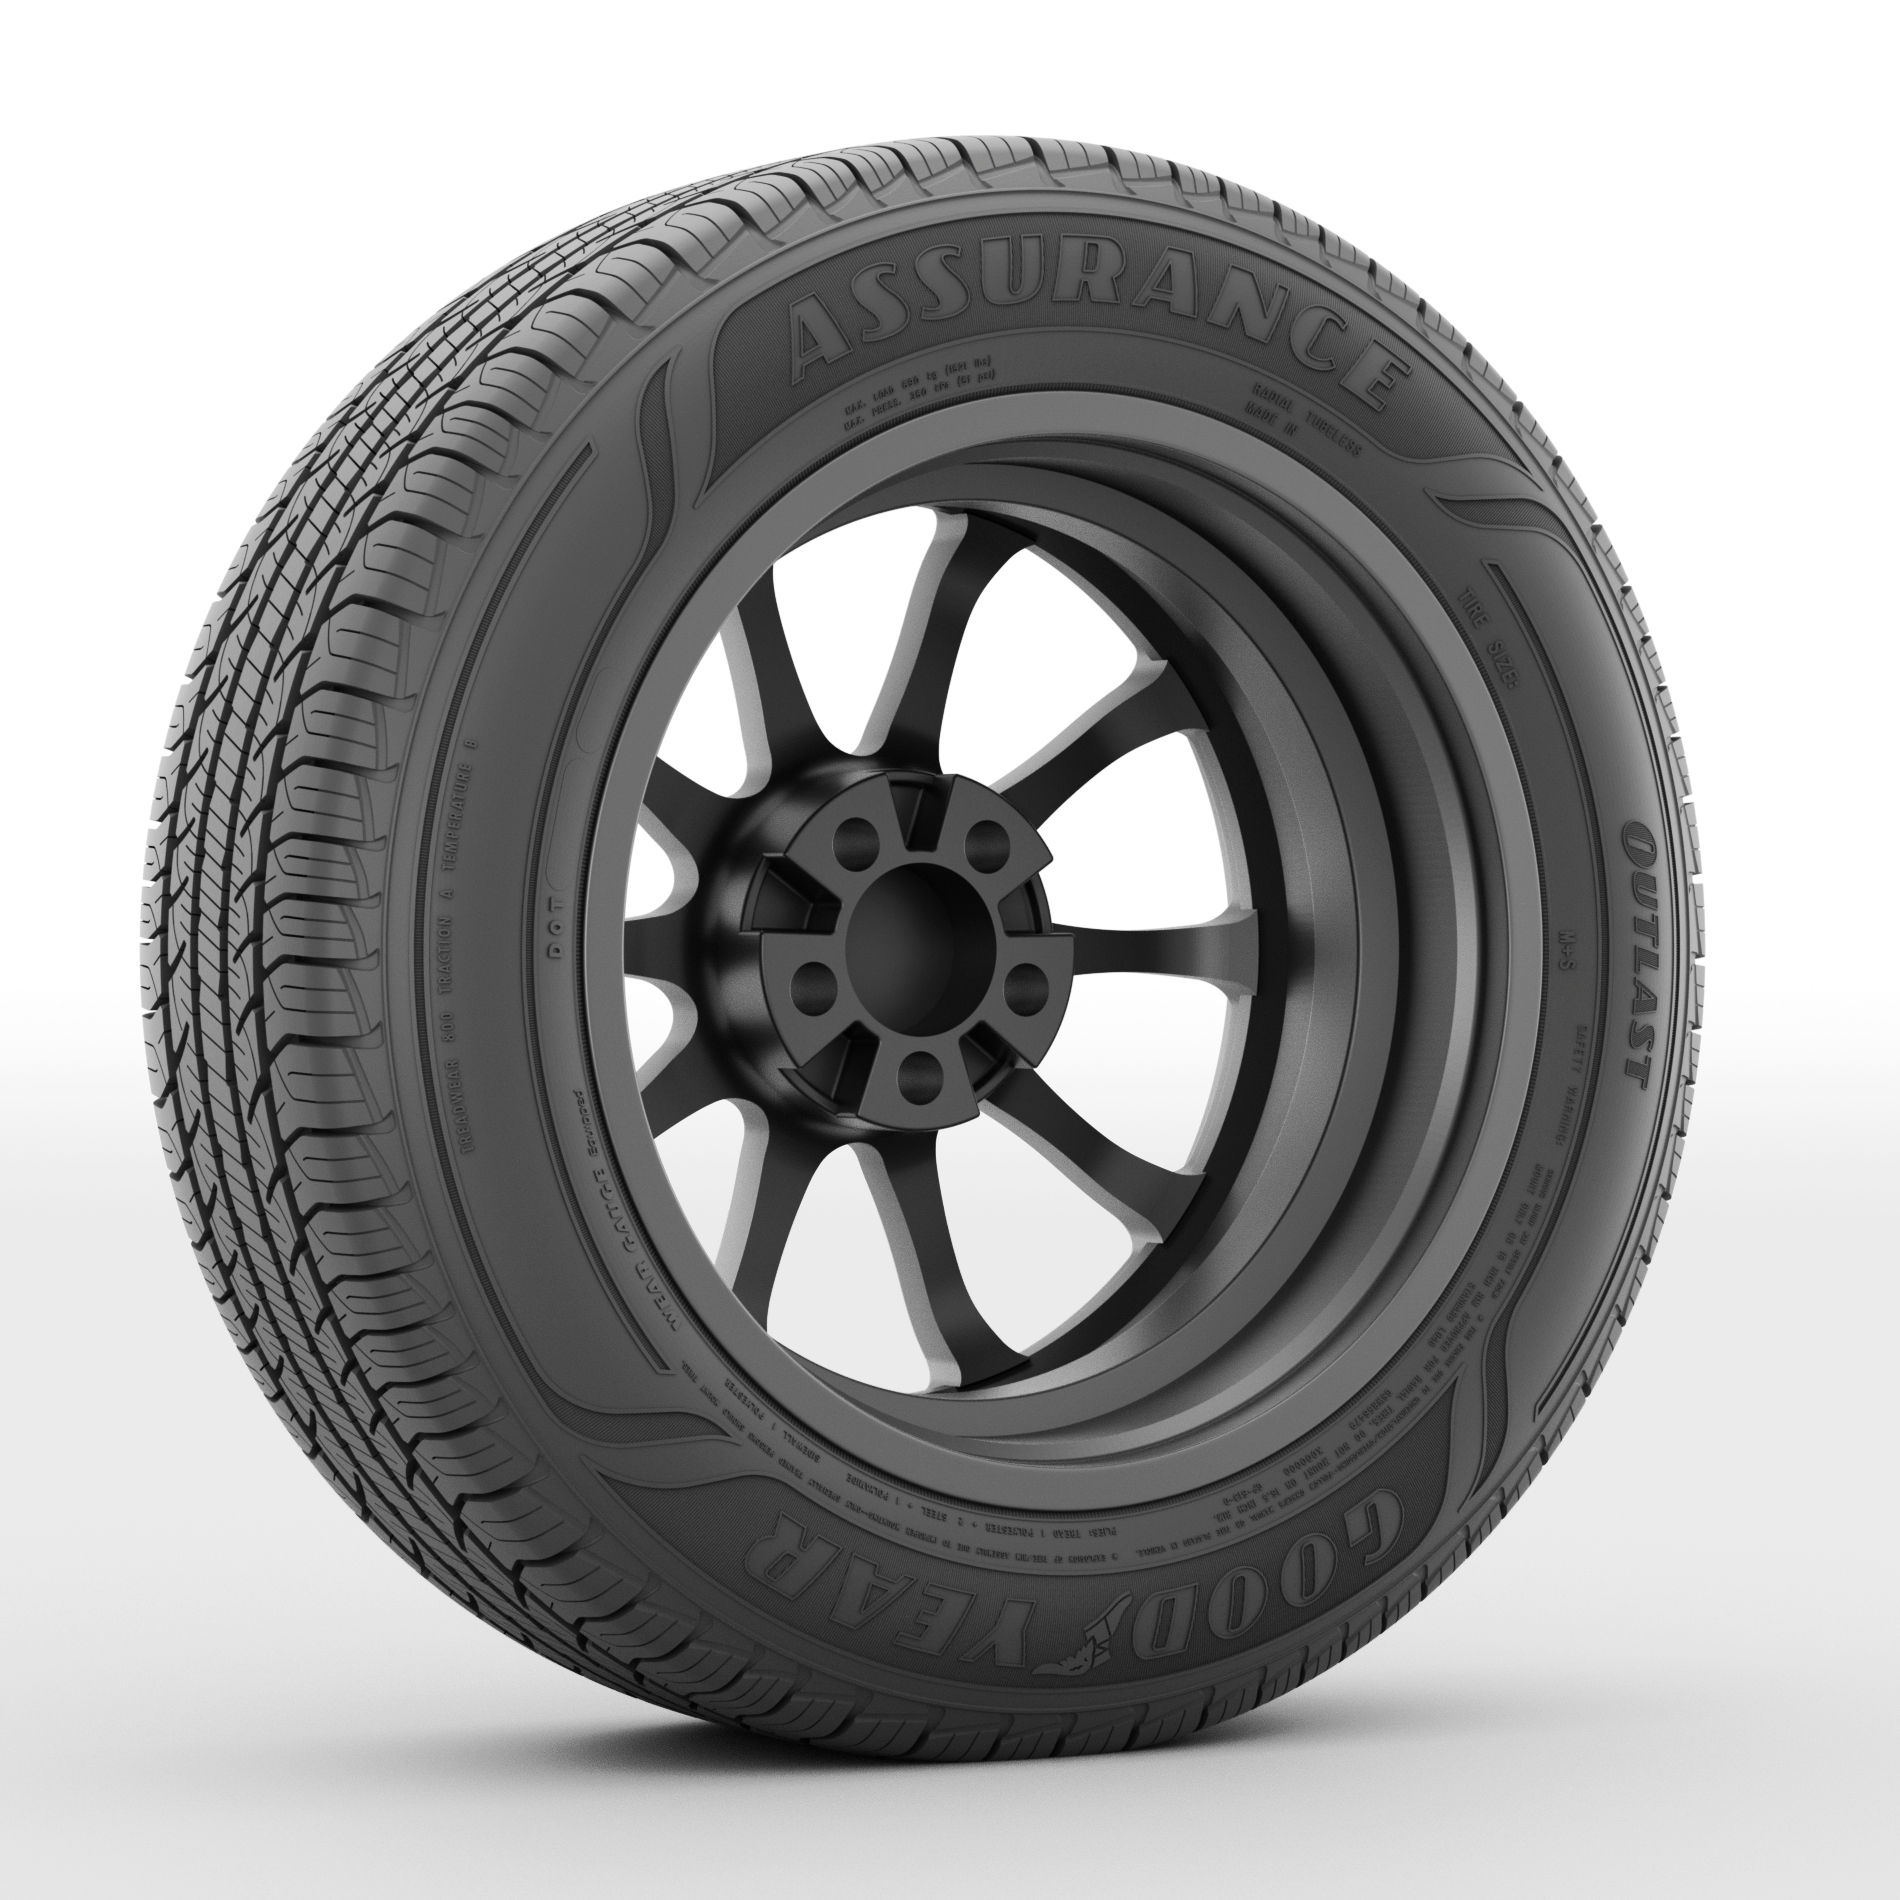 Tire Assurance Outlast Goodyear 98H 225/60R16 All-Season